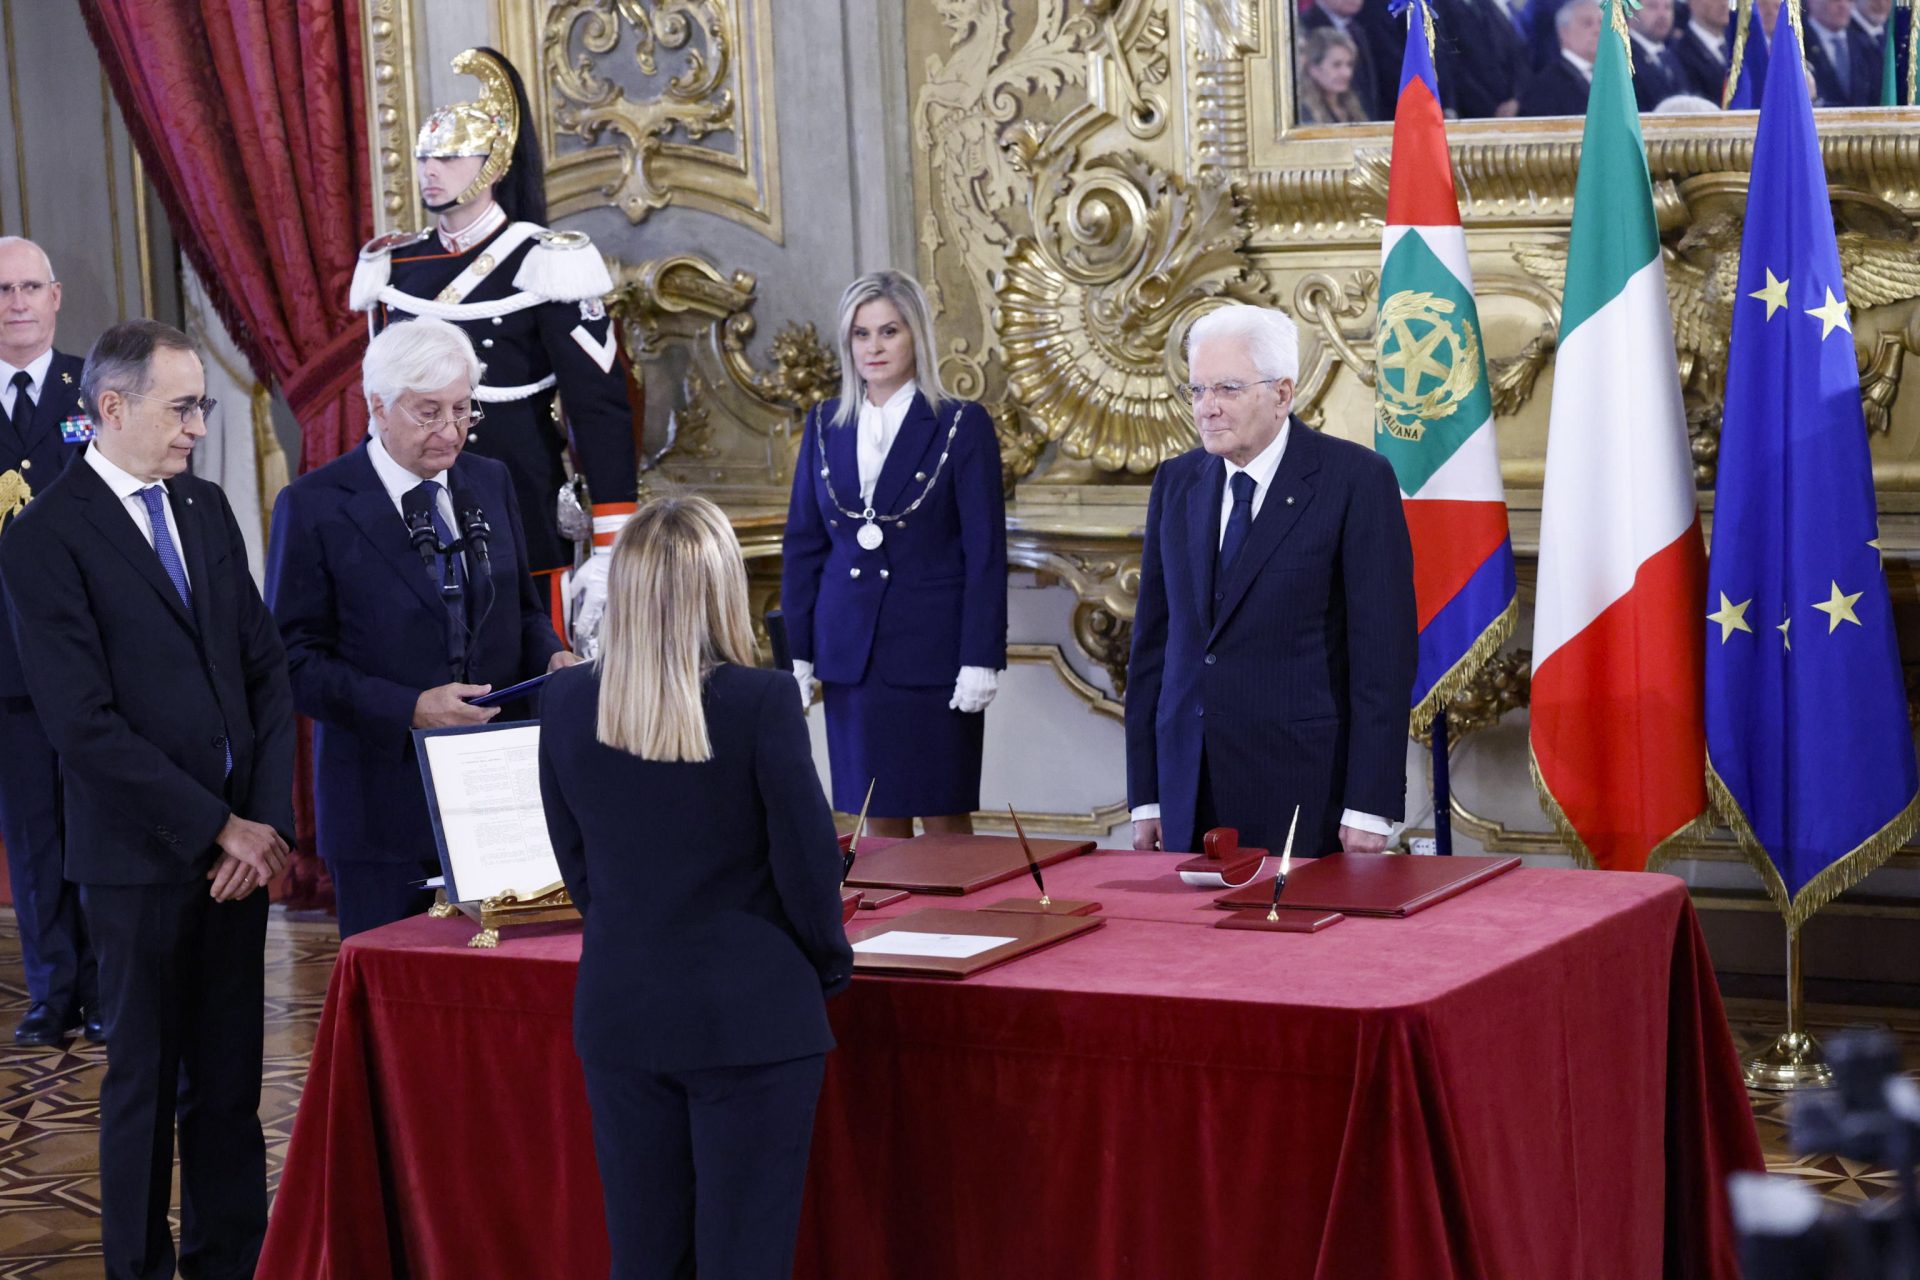 Giorgia Meloni jura como nueva primera ministra de Italia